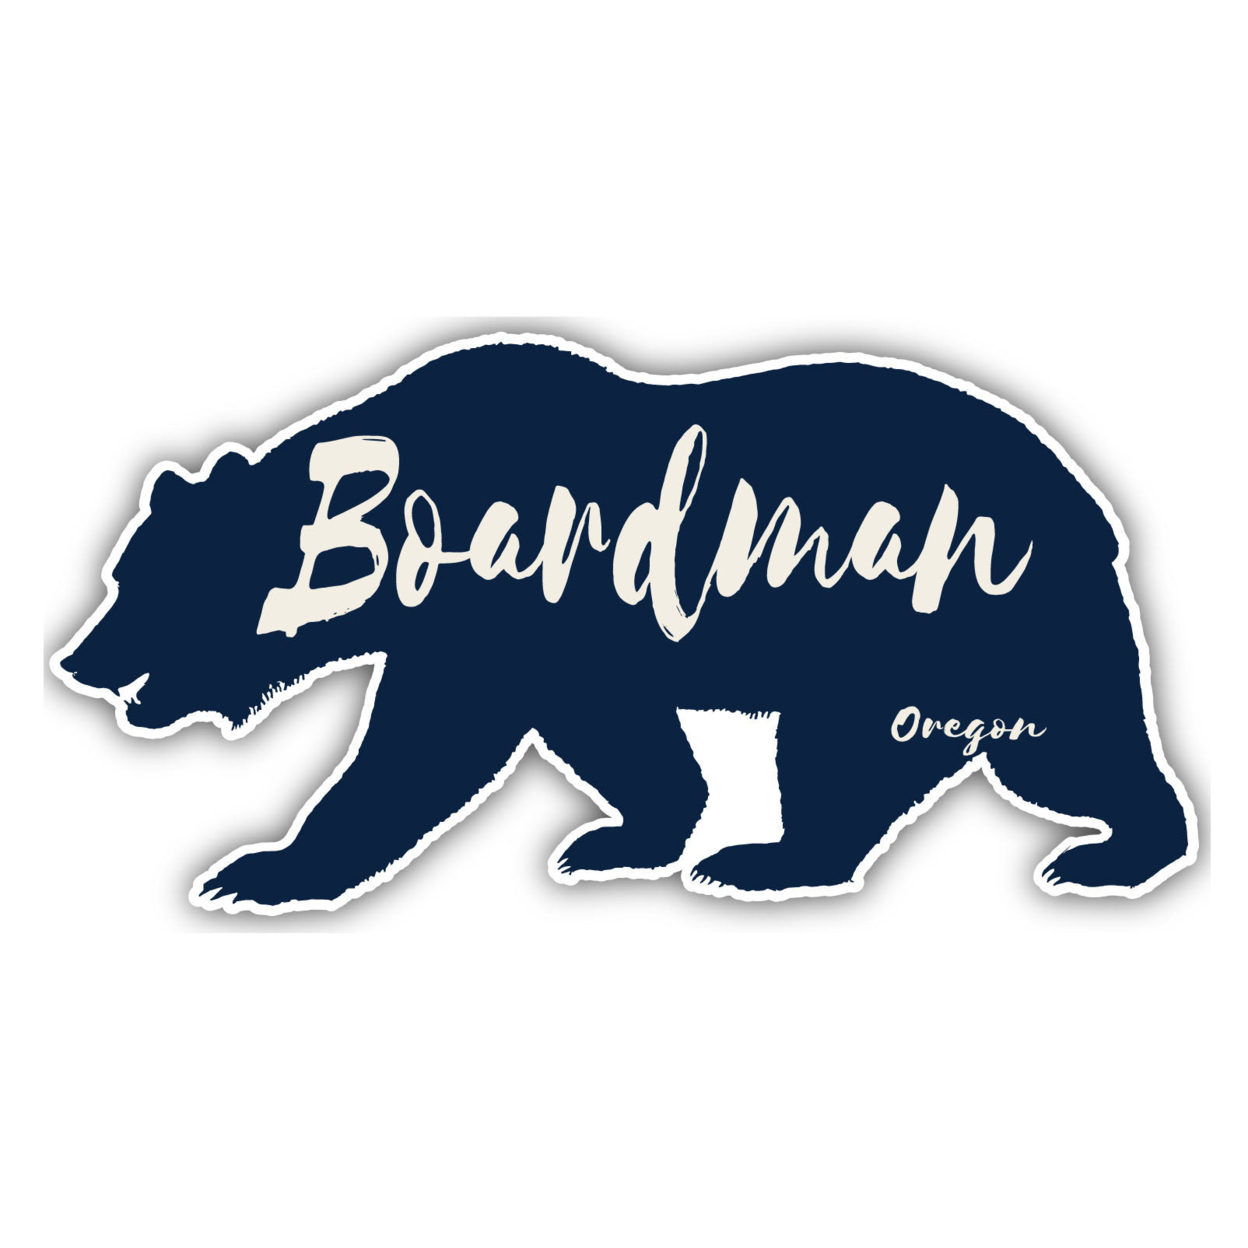 Boardman Oregon Souvenir Decorative Stickers (Choose Theme And Size) - 4-Pack, 2-Inch, Bear